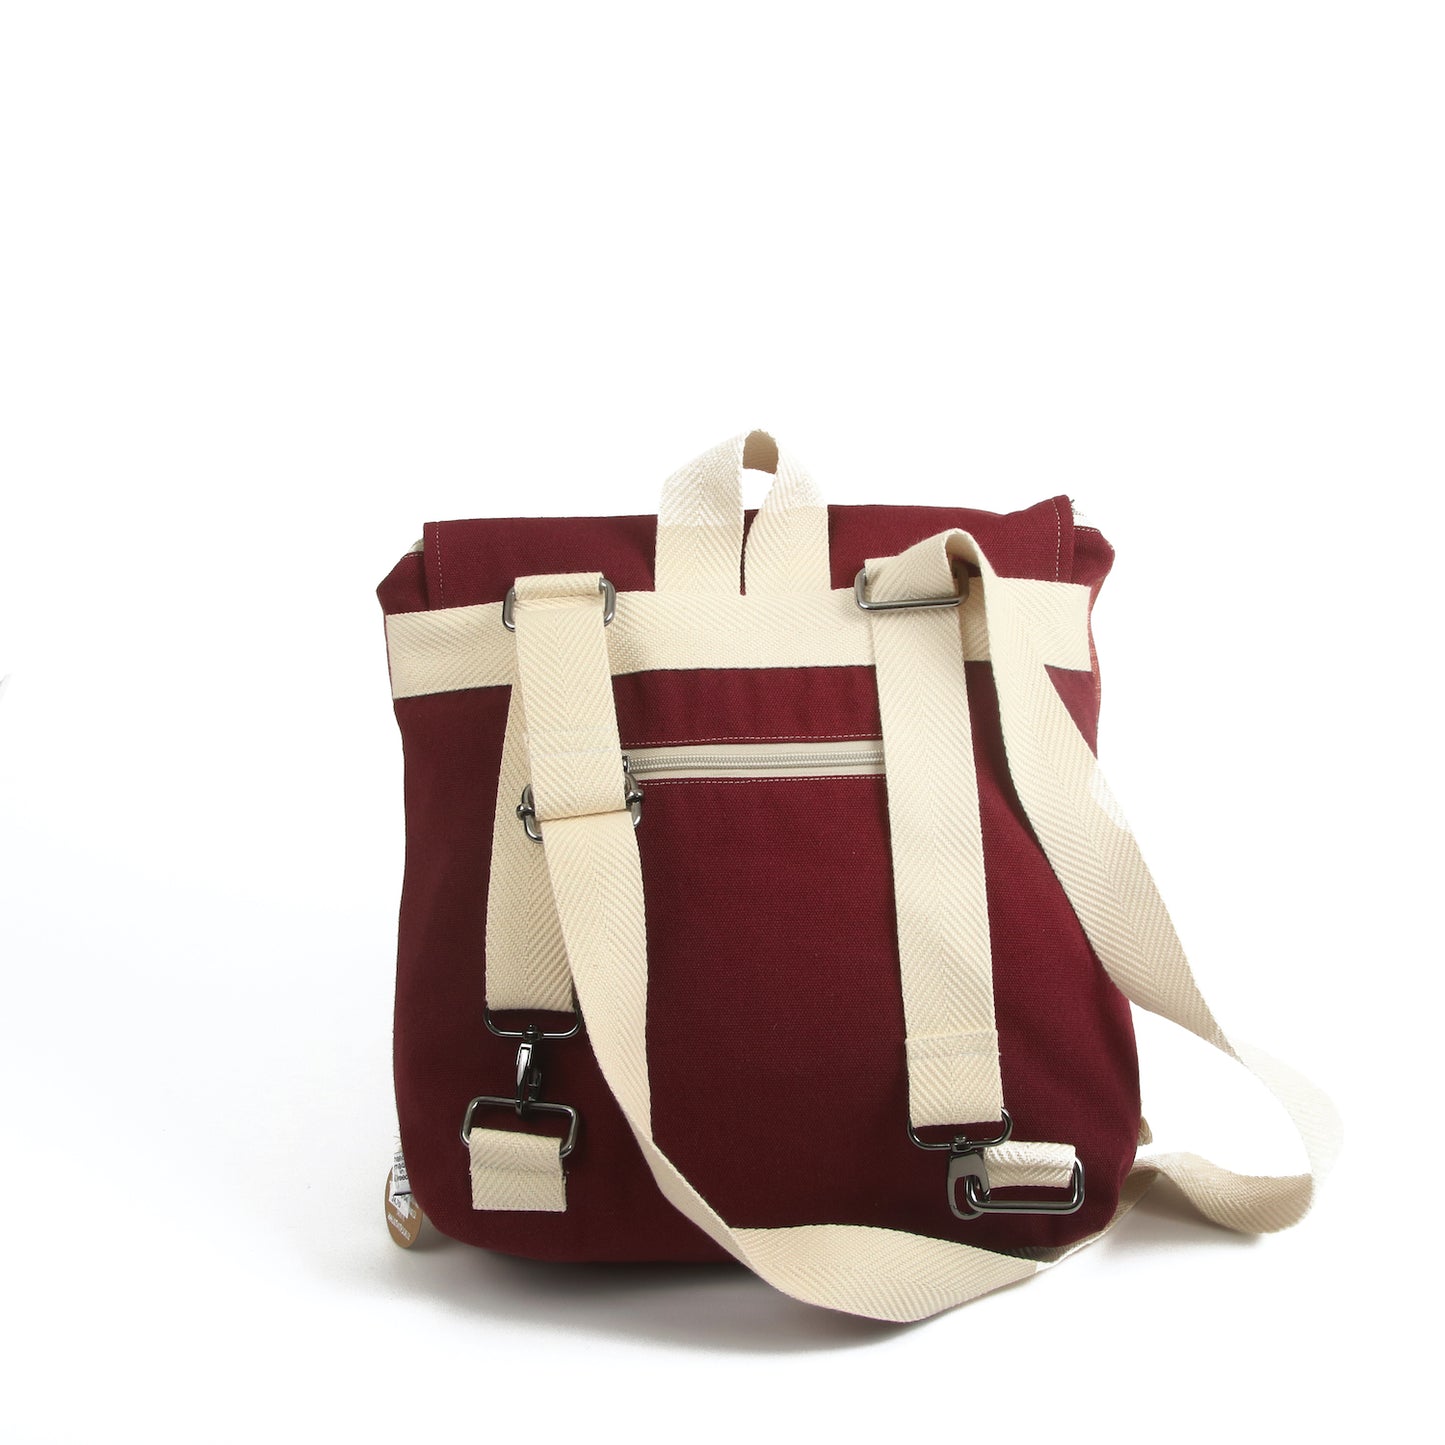 Themis Leros Backpack / Messenger Bag